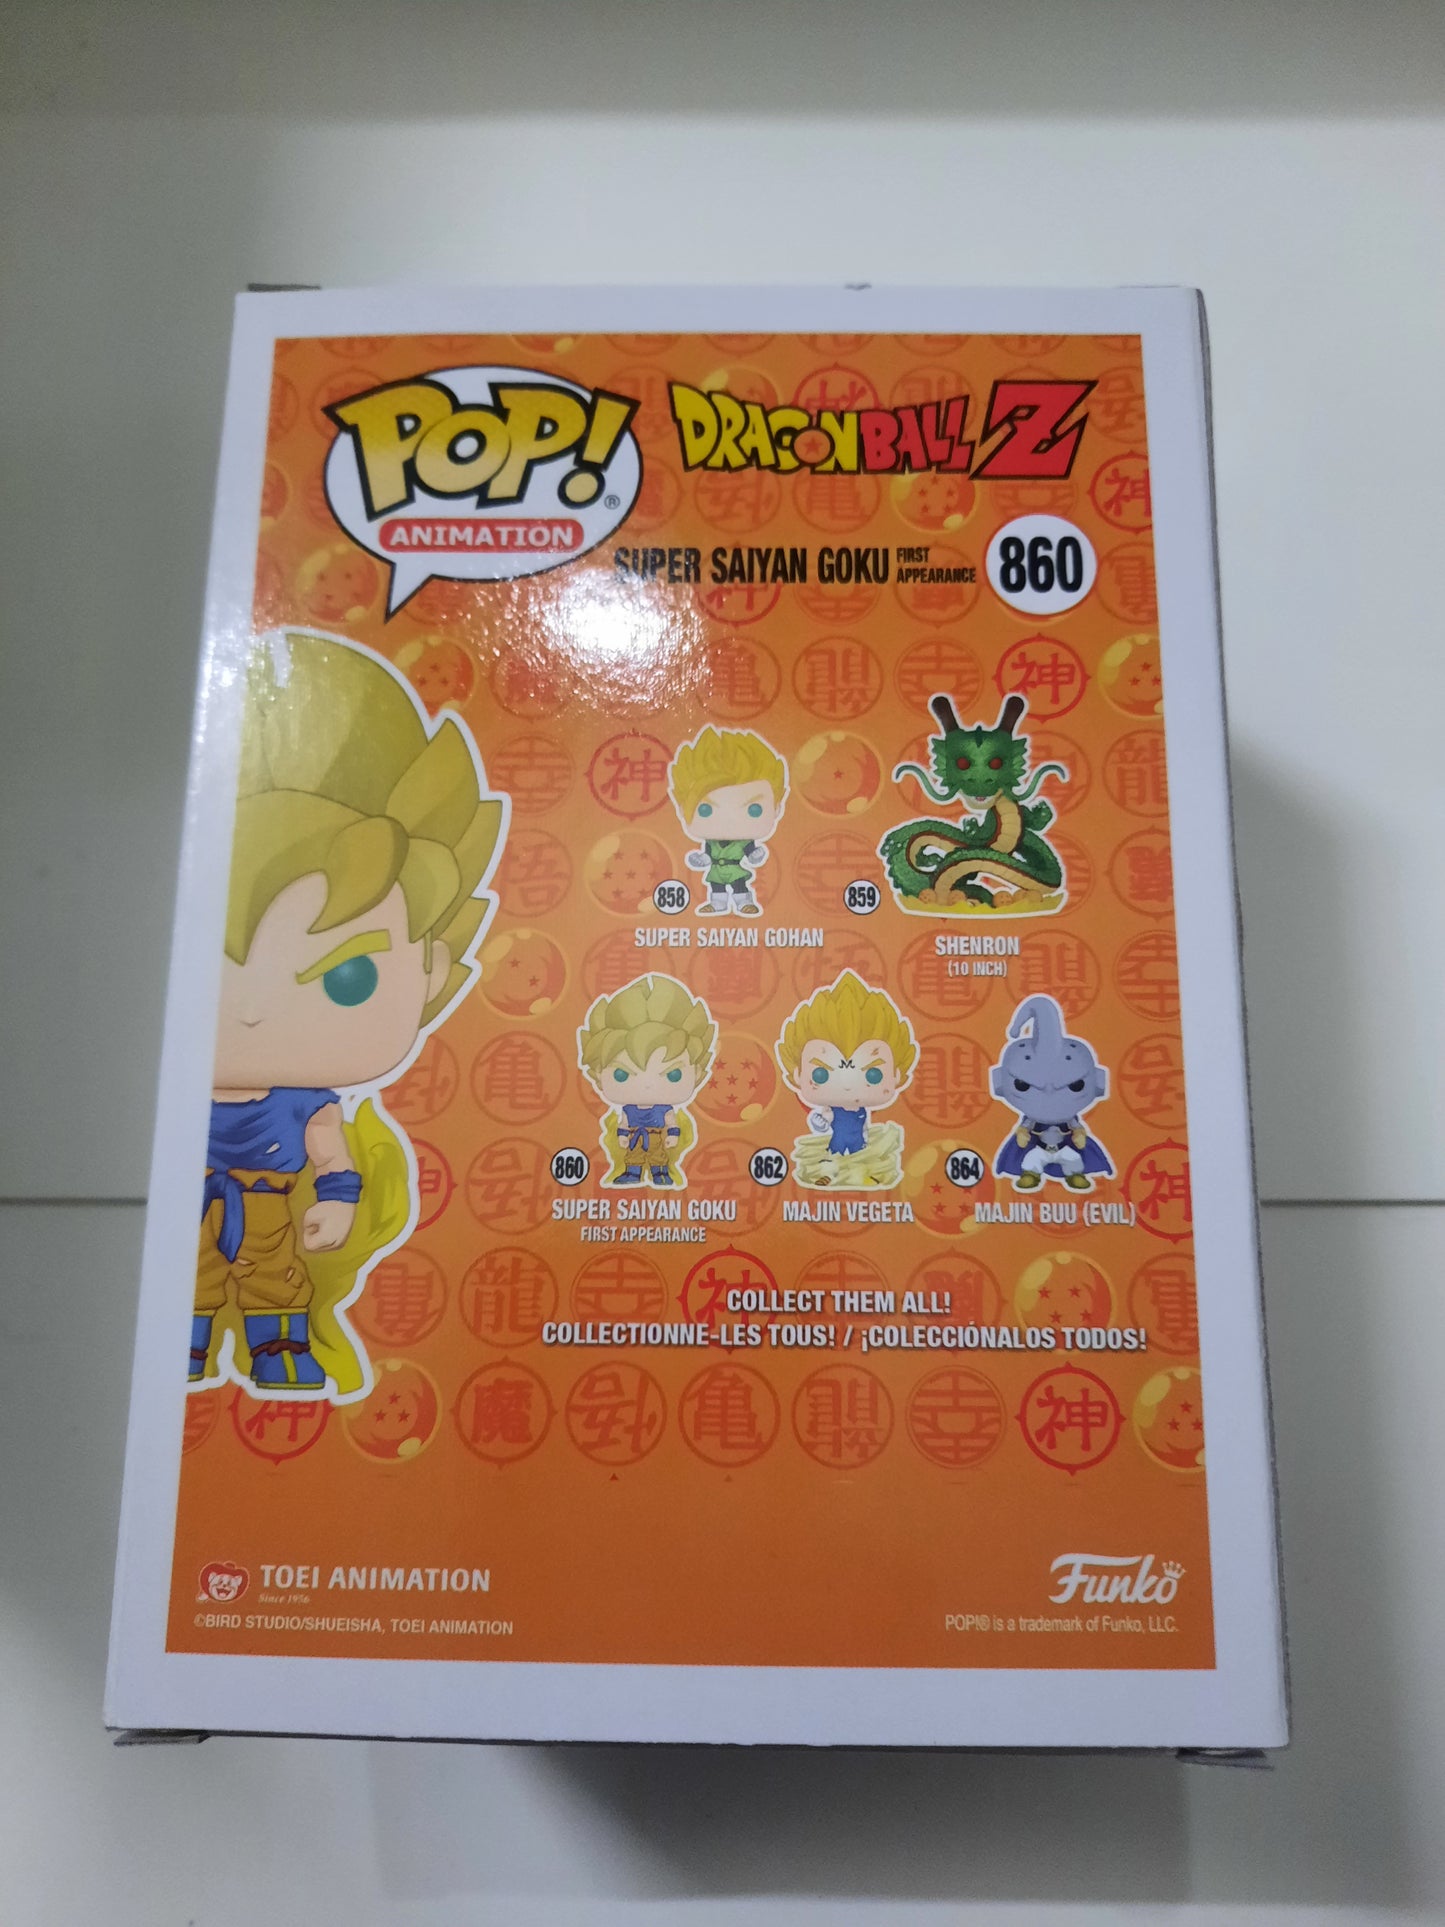 Funko Pop Super Sayan Goku with Appearance 860 - Dragonball Z